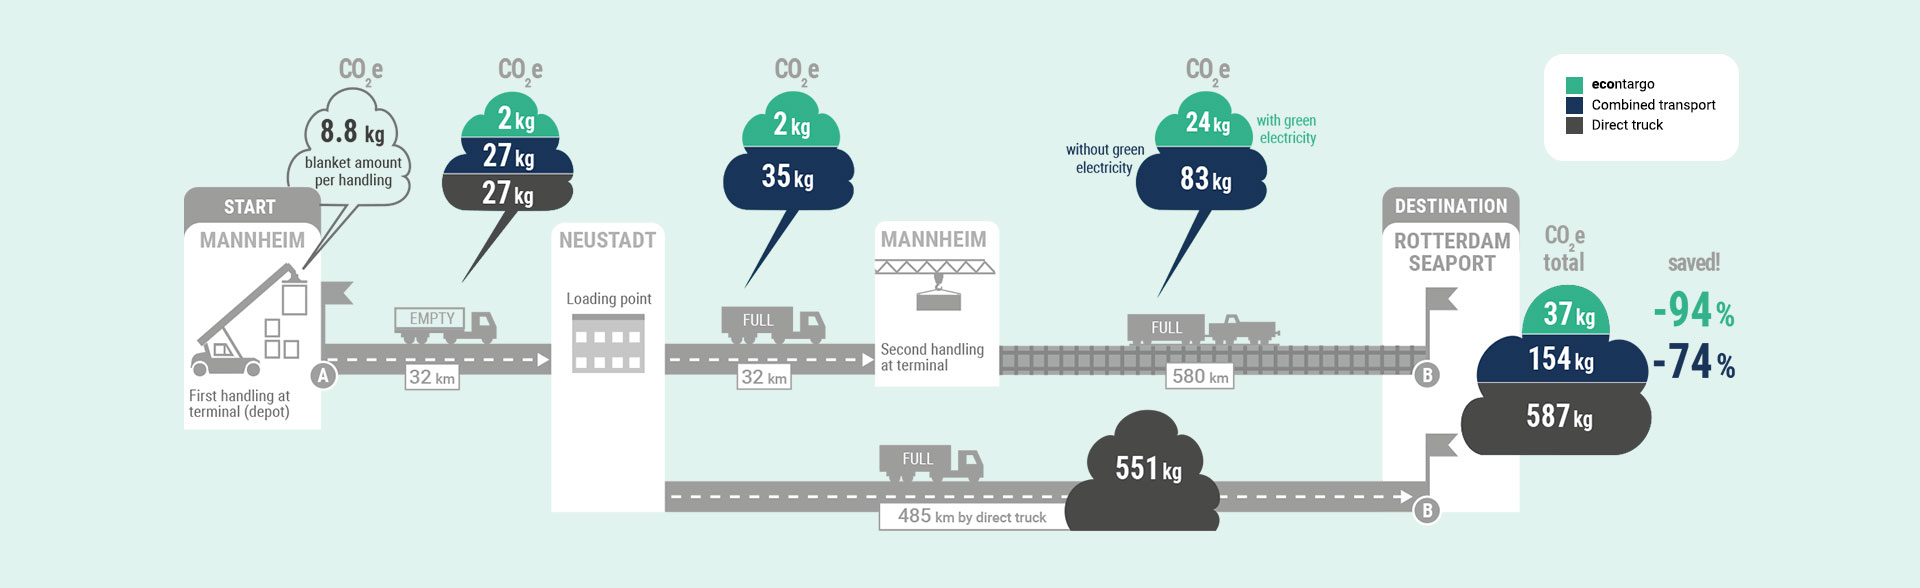 econtargo comparison: combined transport Mannheim-Rotterdam